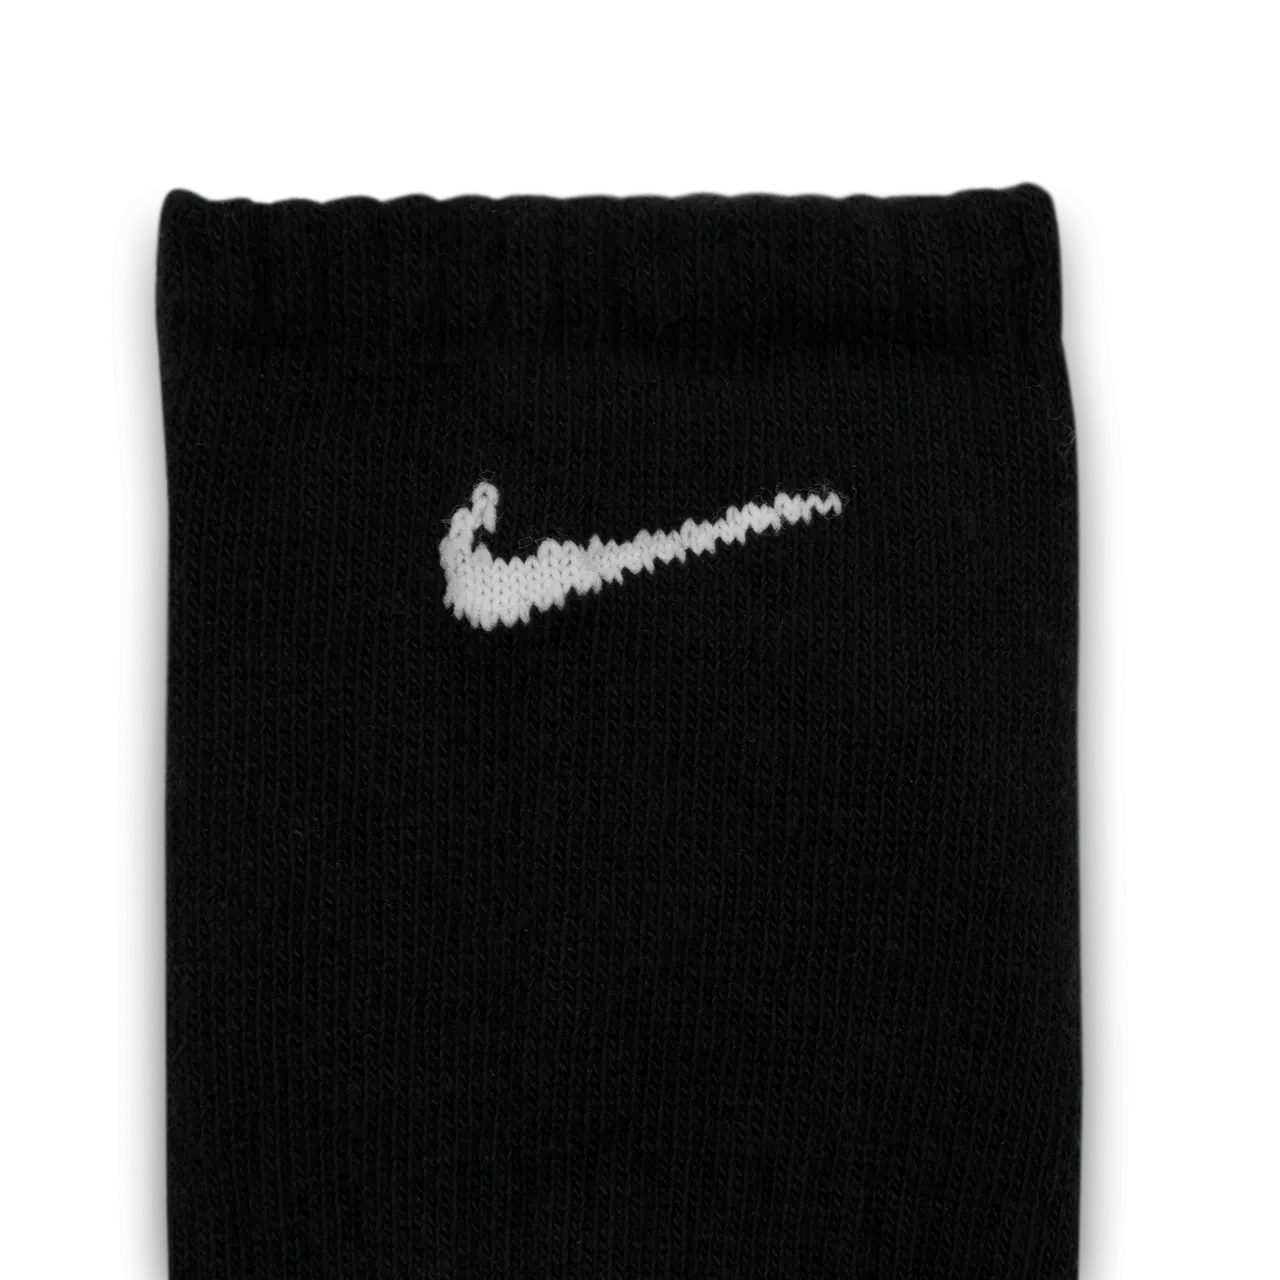 Nike Everyday Lightweight Training No-Show Socks (3 Pairs) - Black - Polyester